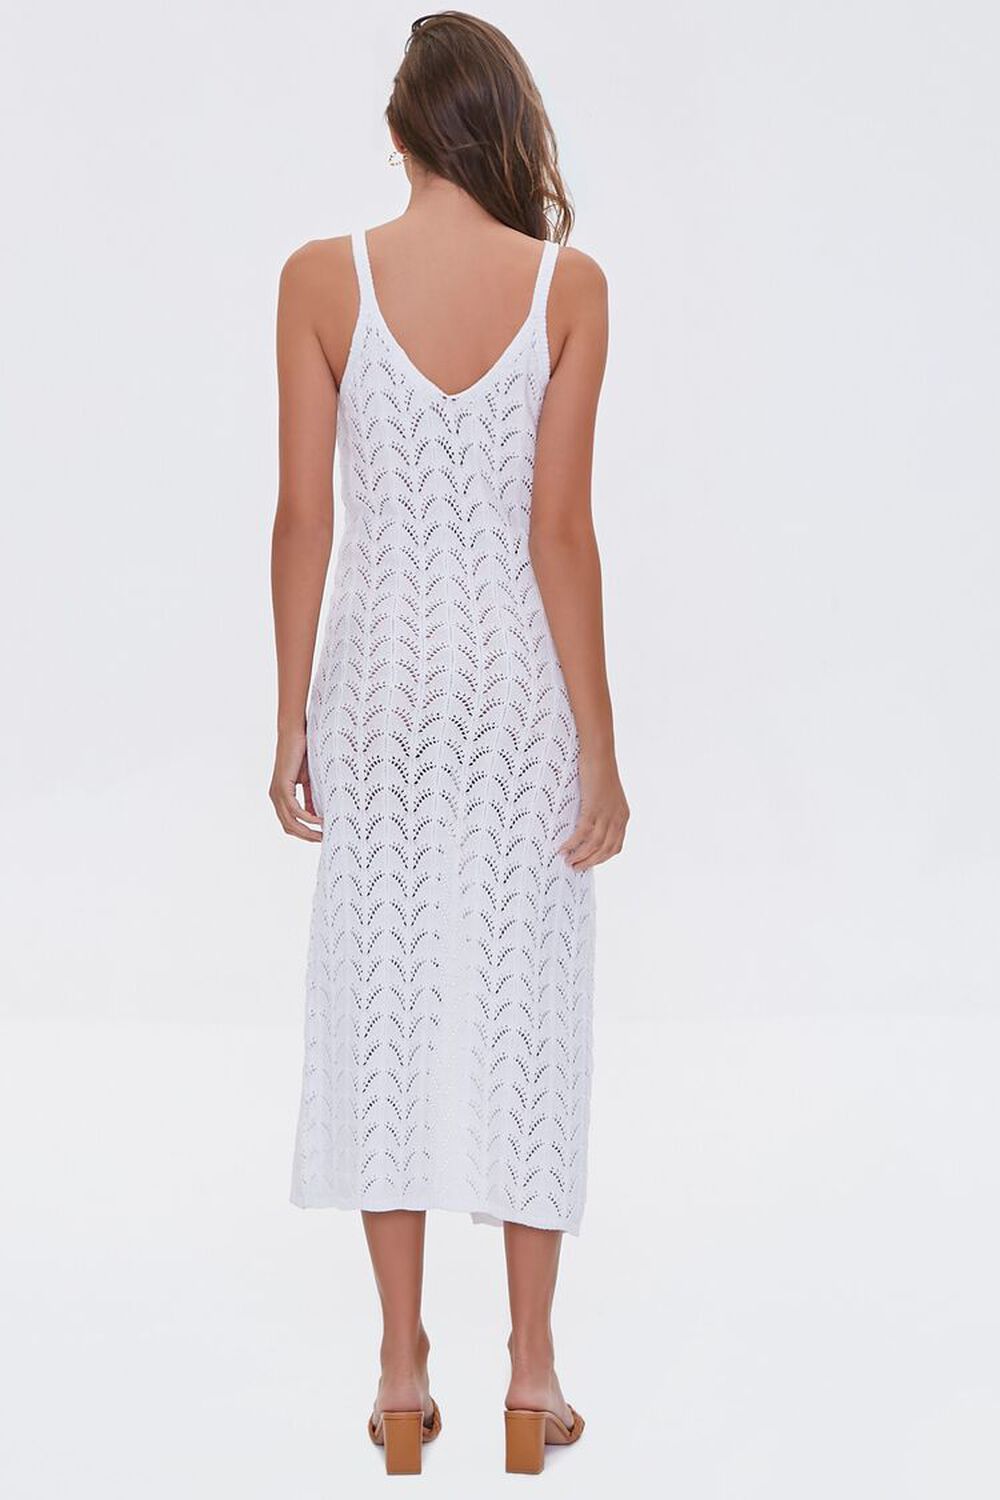 WHITE Pointelle Knit Midi Dress, image 3